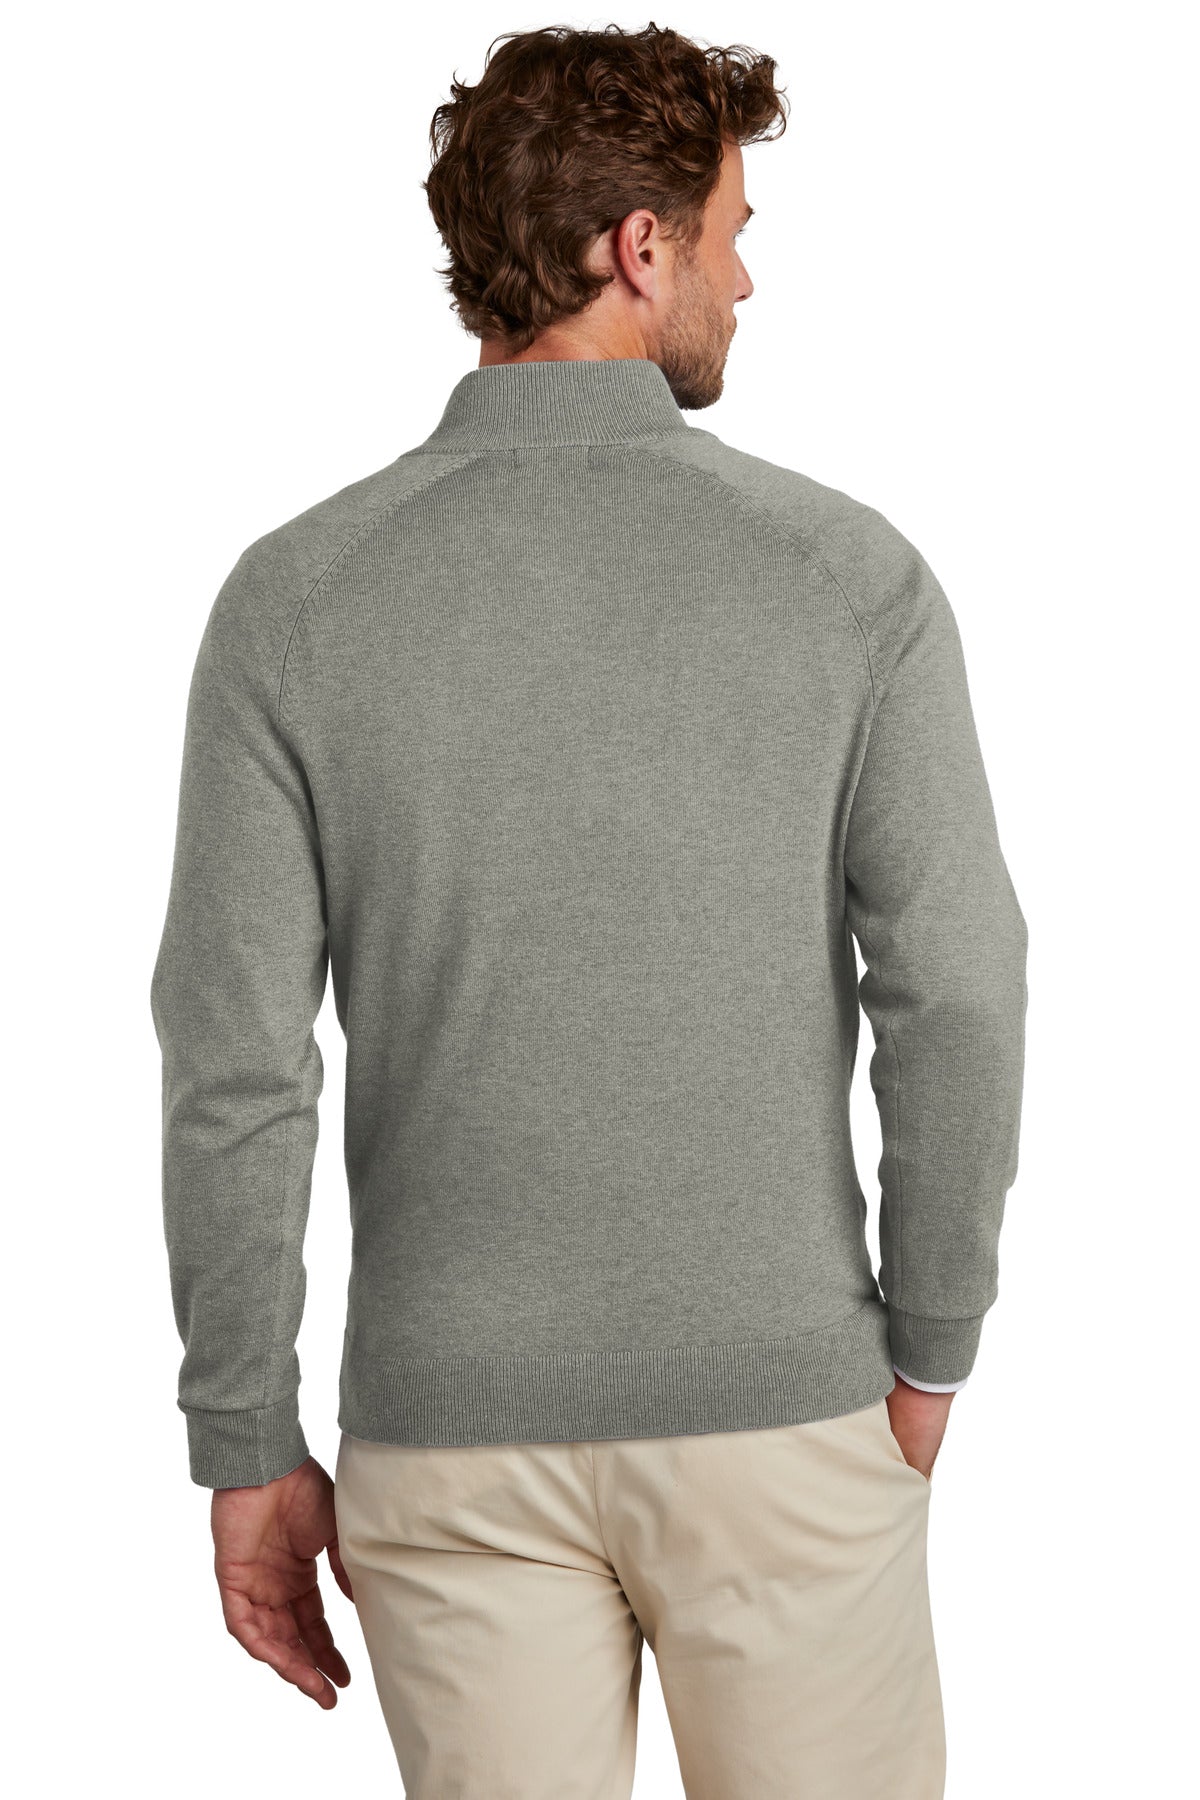 Brooks Brothers Cotton Stretch 1/4-Zip Sweater BB18402